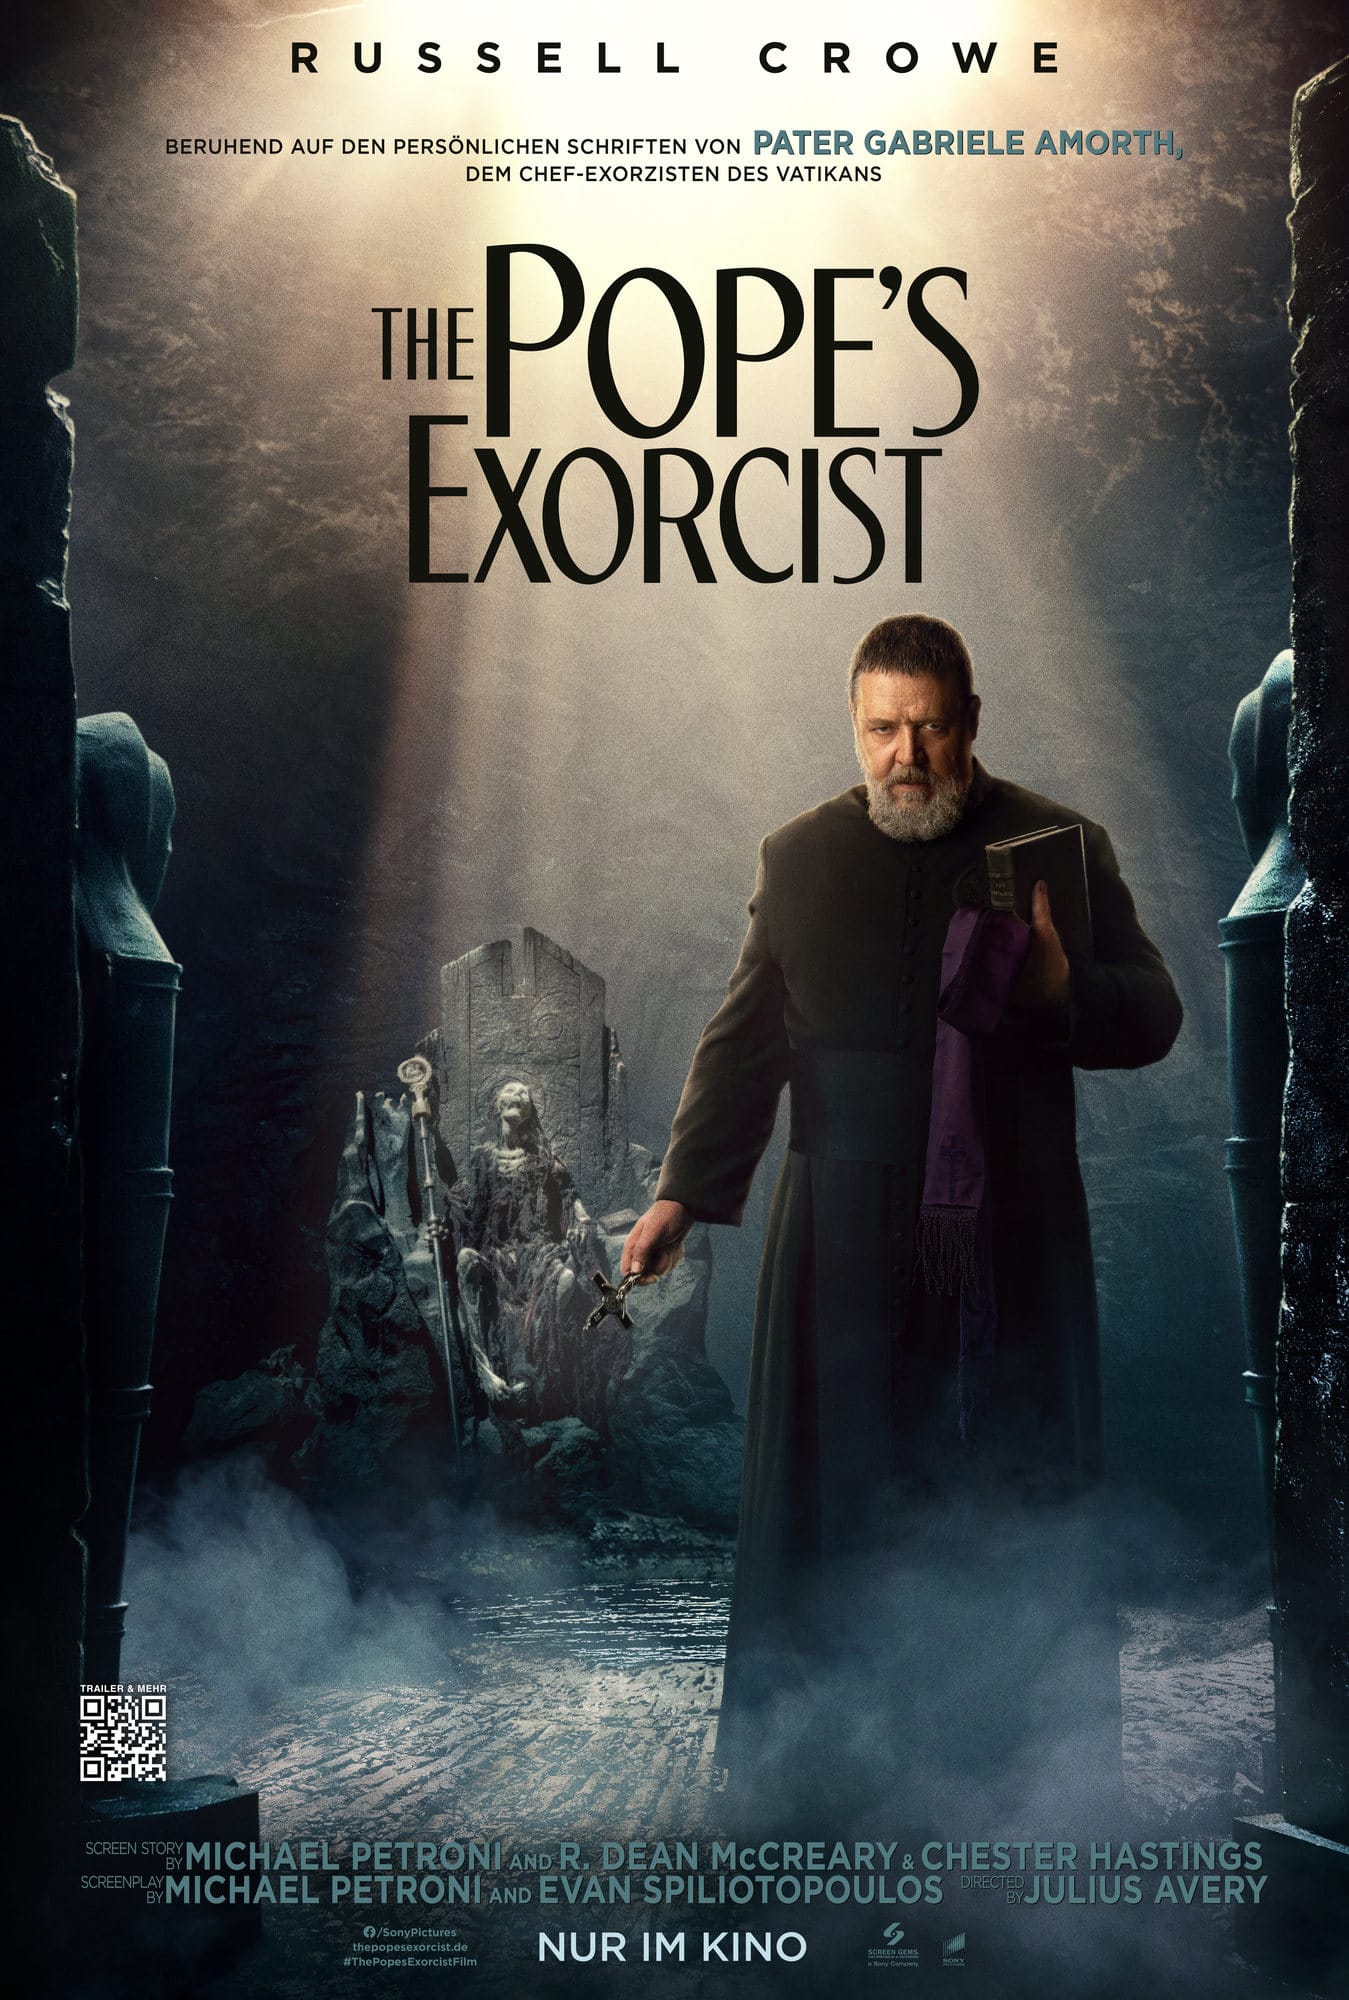 The Popes Exorcist - Poster